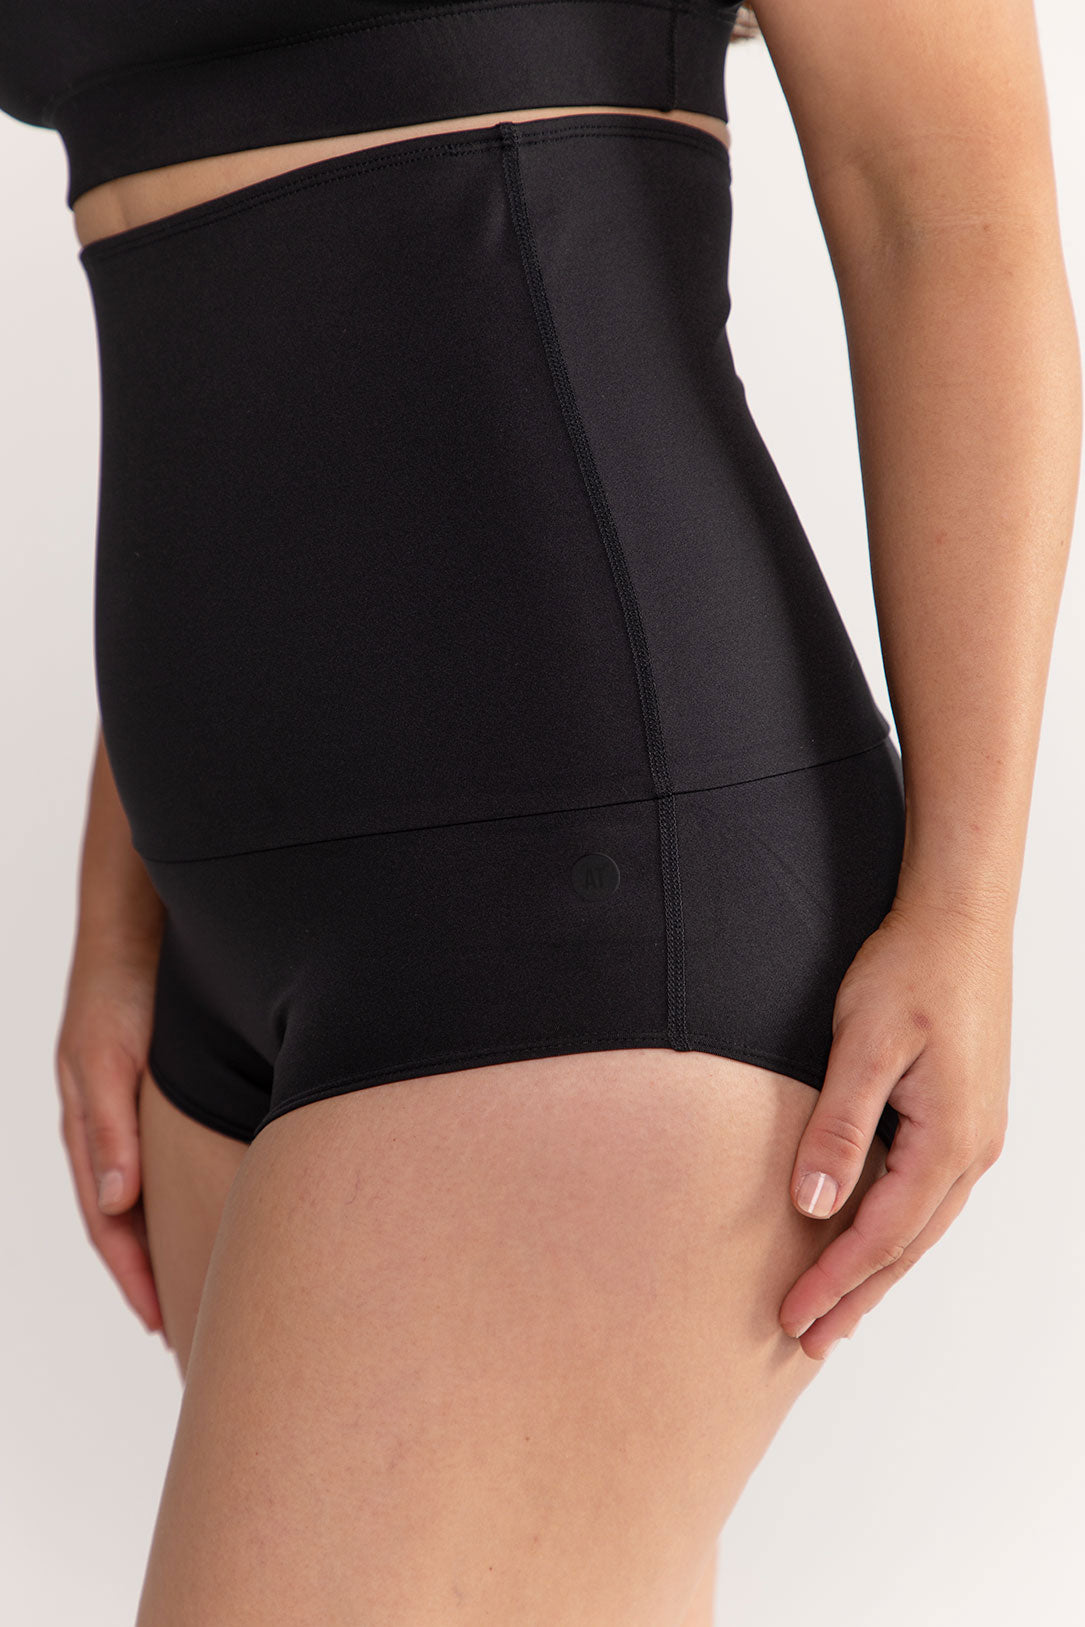 postnatal-recovery-brief-underwear-black-large-side